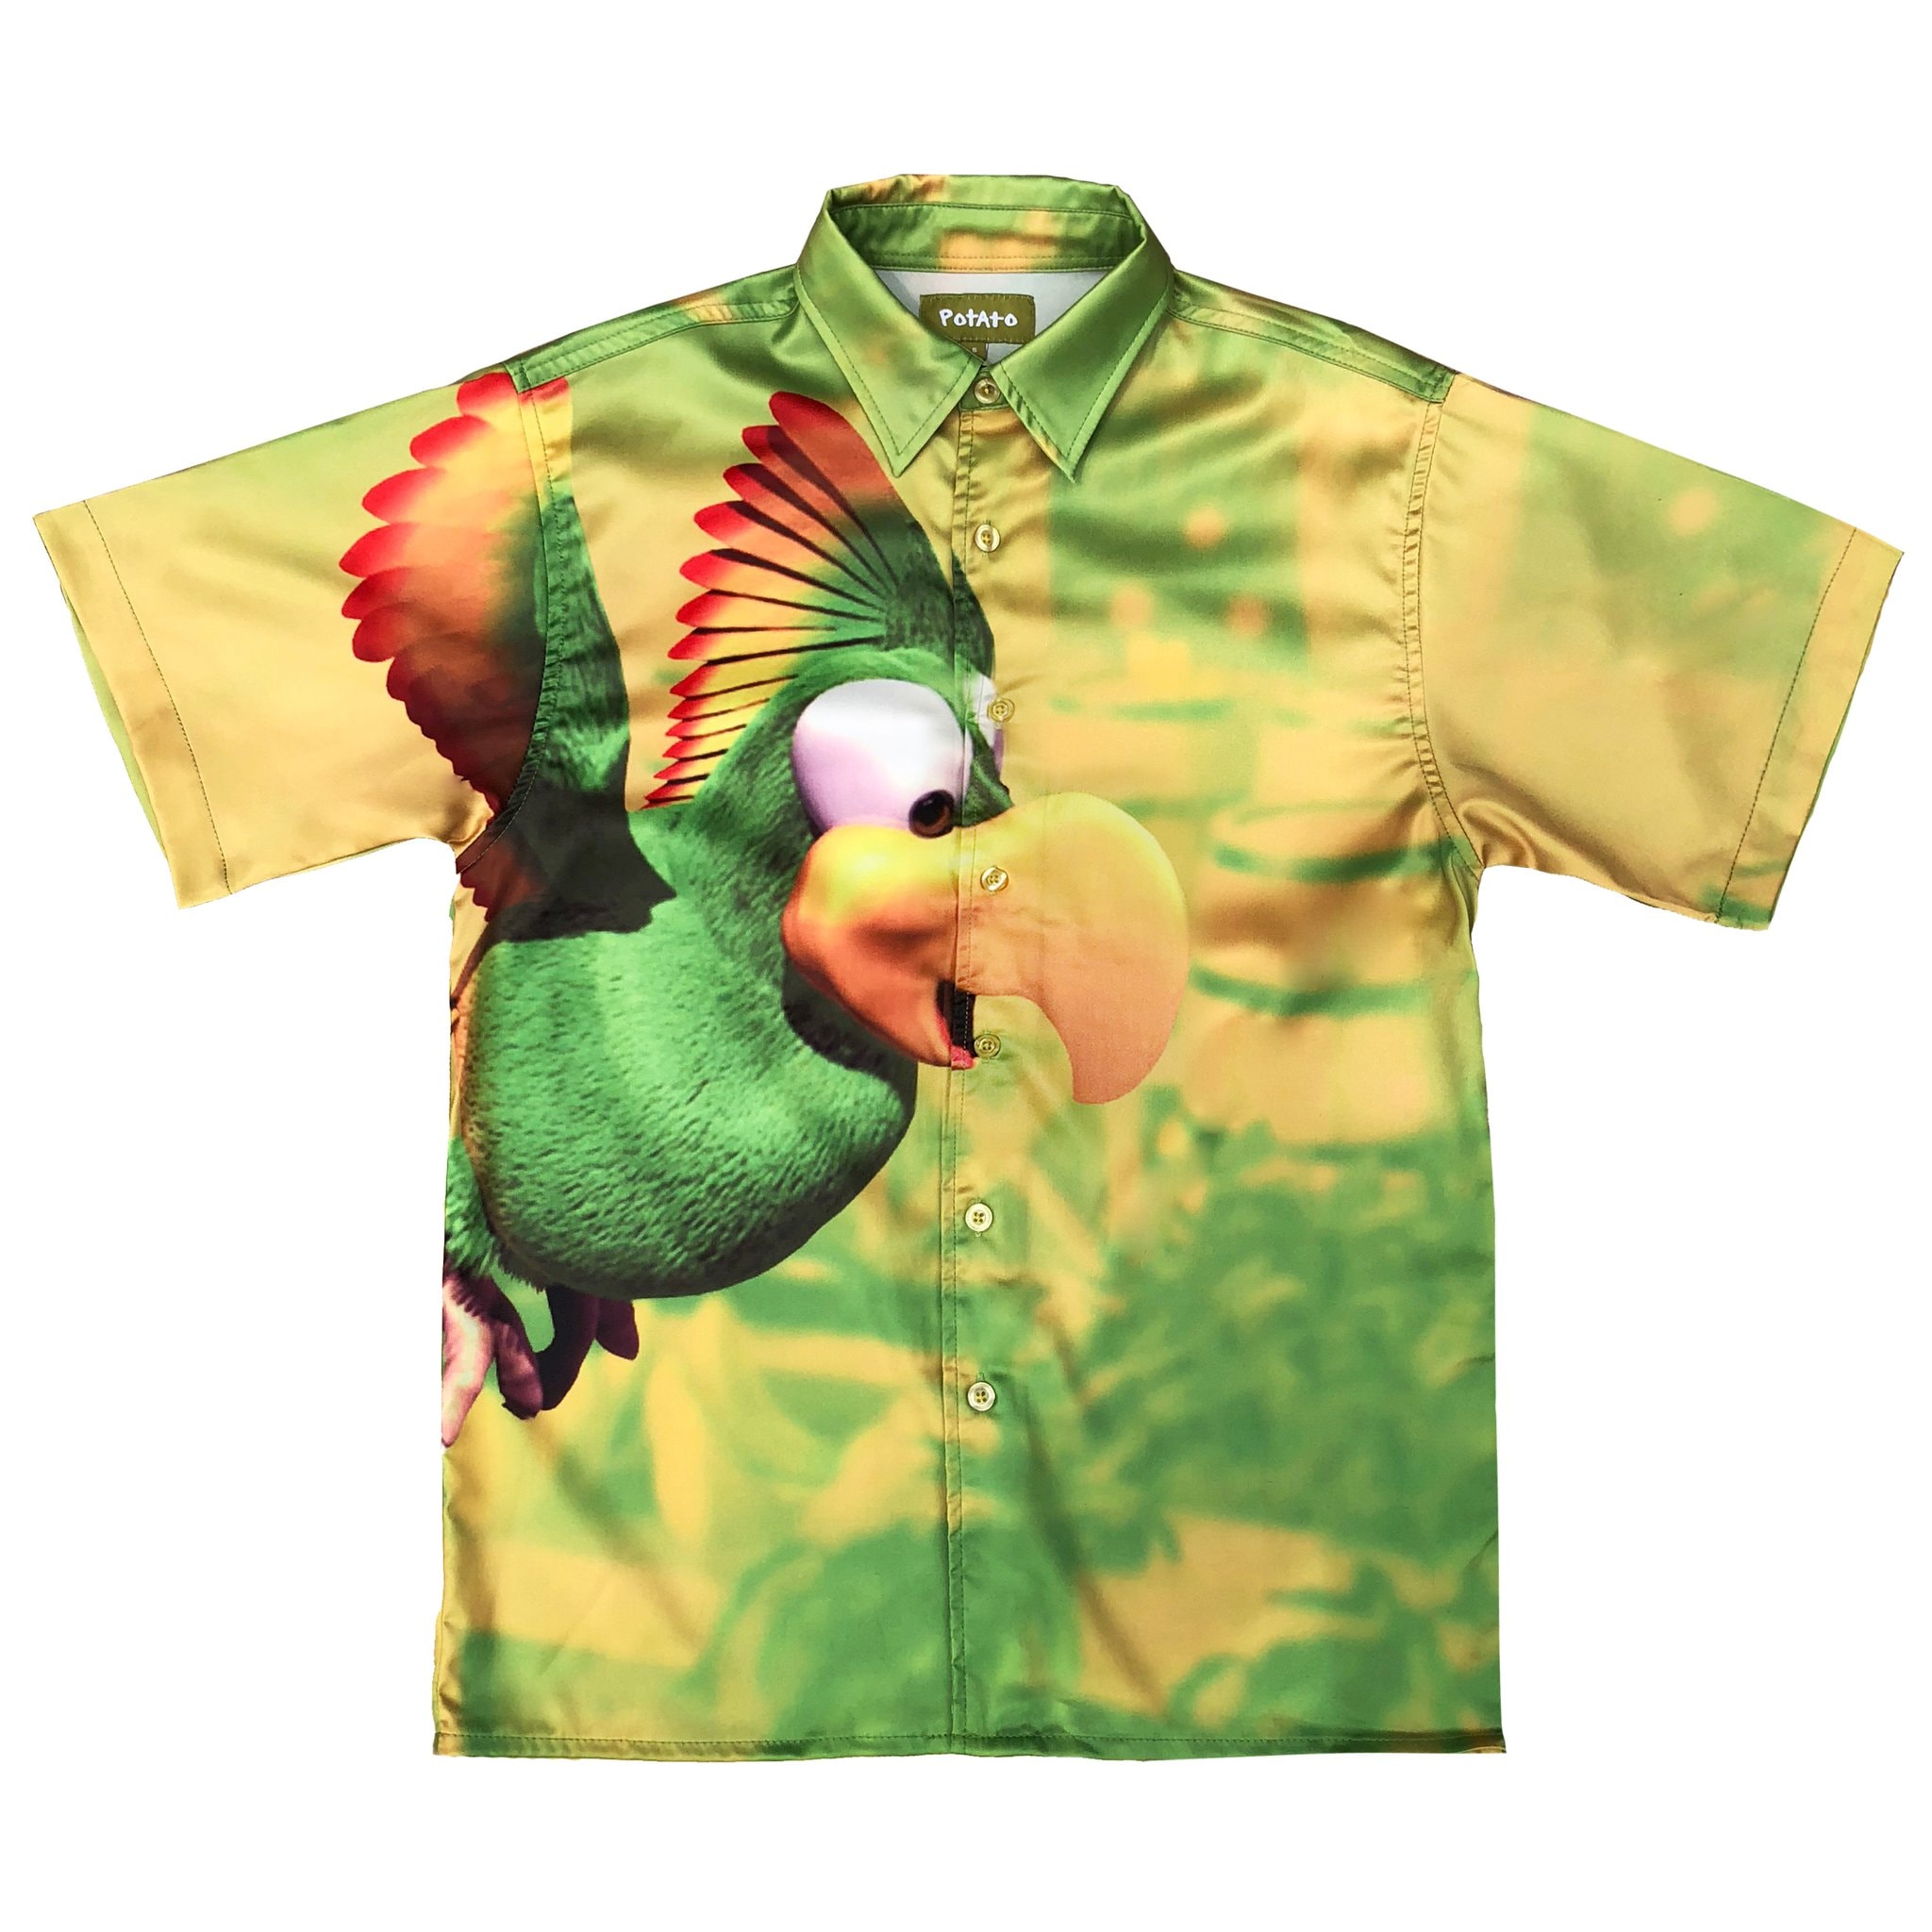 imran potato donkey kong country parody shirt green gold Squawks parrot